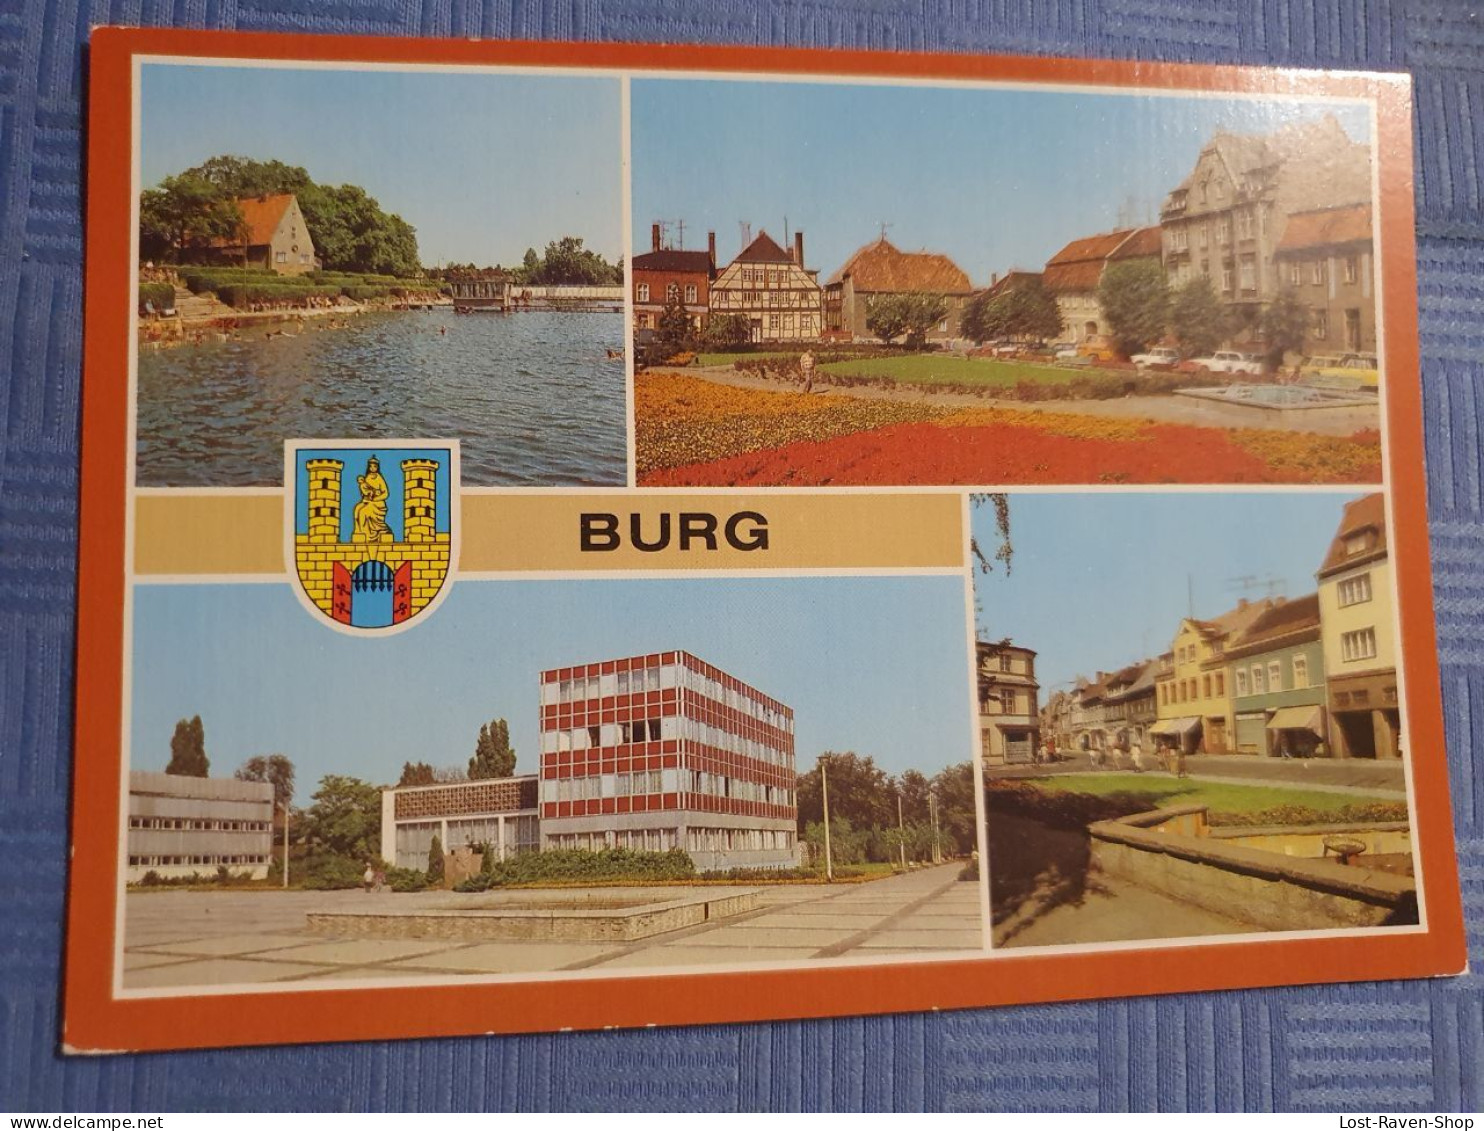 Burg - Burg (Spreewald)